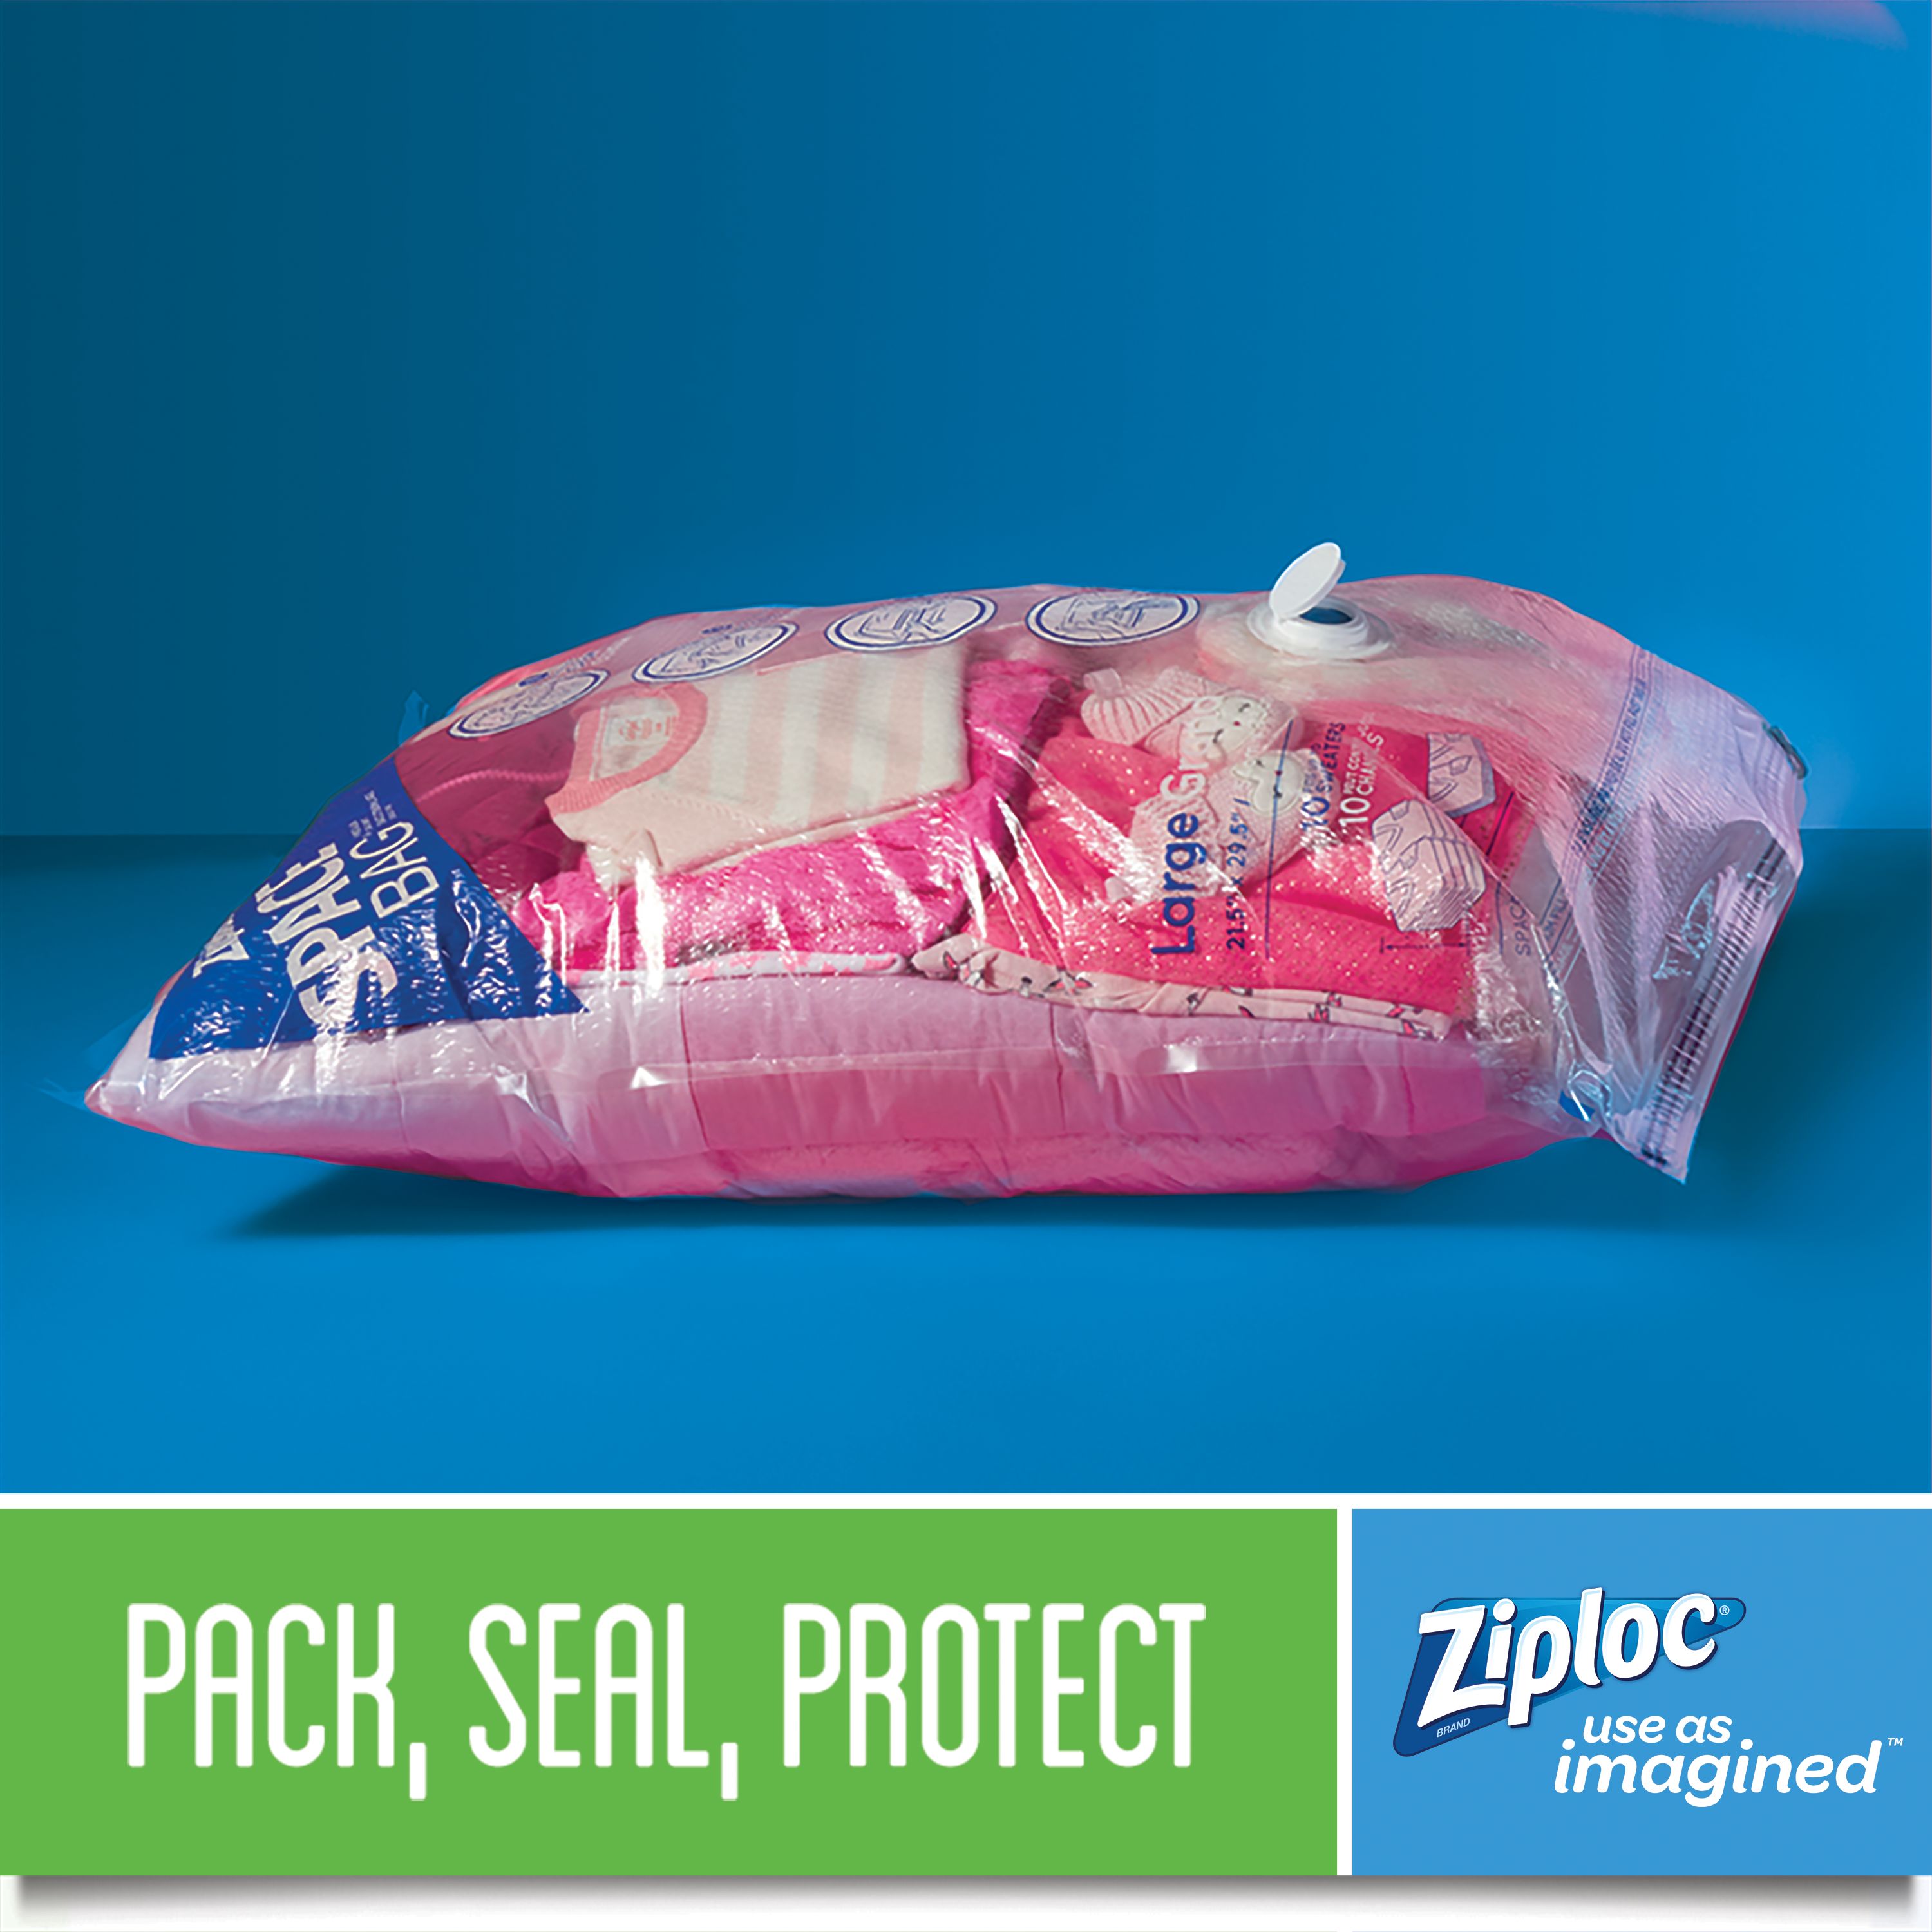 Ziploc Space Bag 2-Count Vacuum Seal Storage Bags in the Plastic Storage  Bags department at